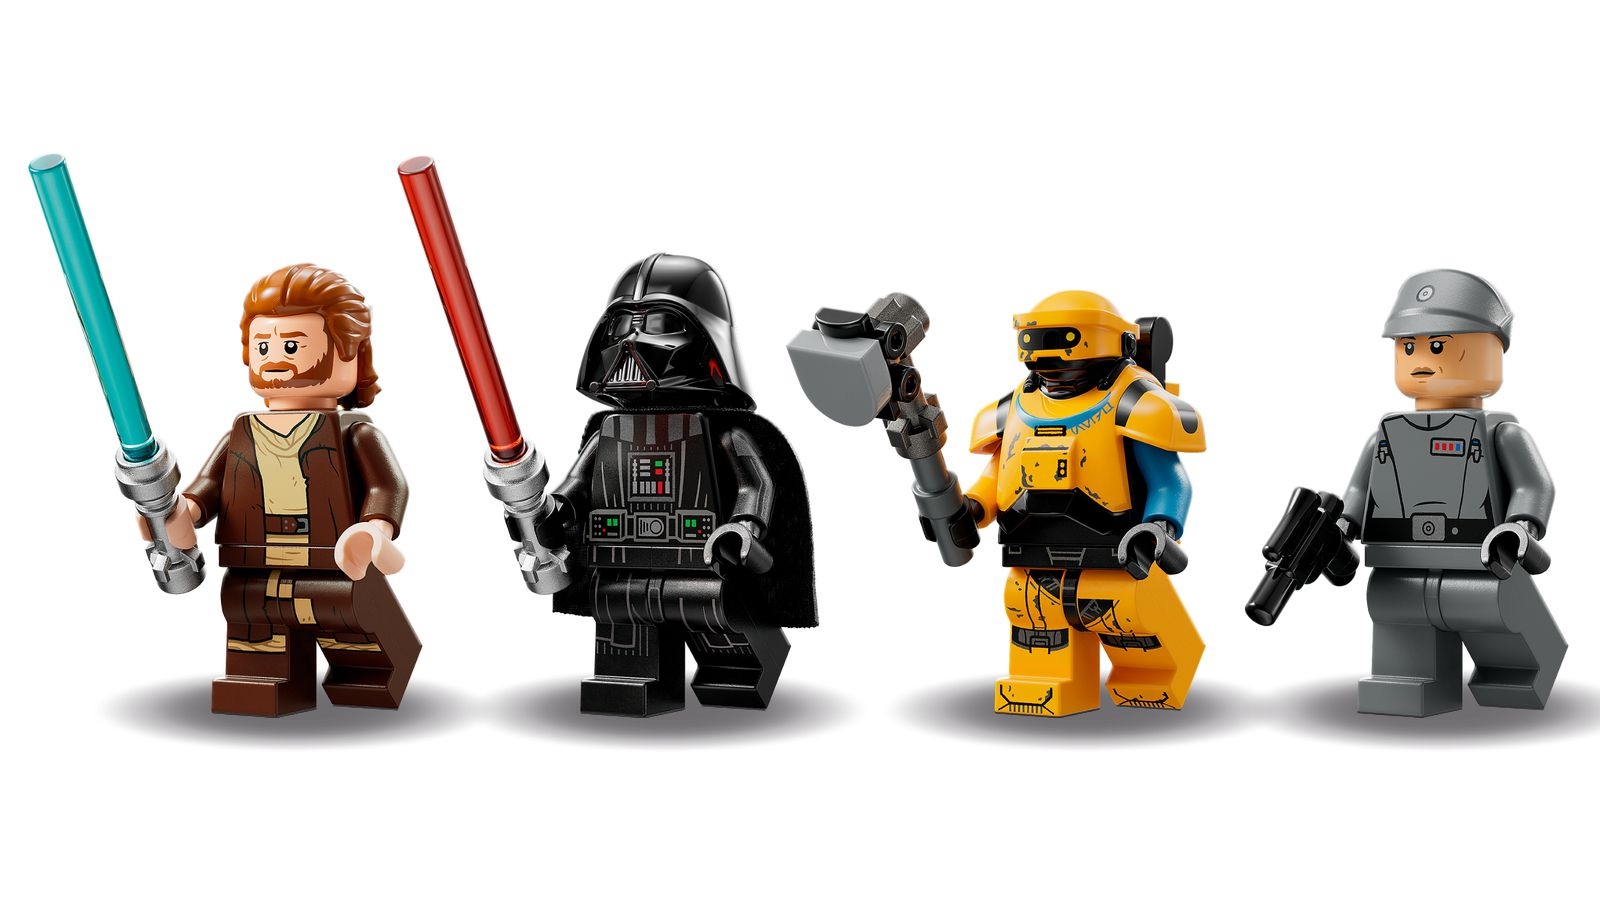 LEGO Star Wars - Obi-Wan Kenobi kontra Darth Vader (75334)